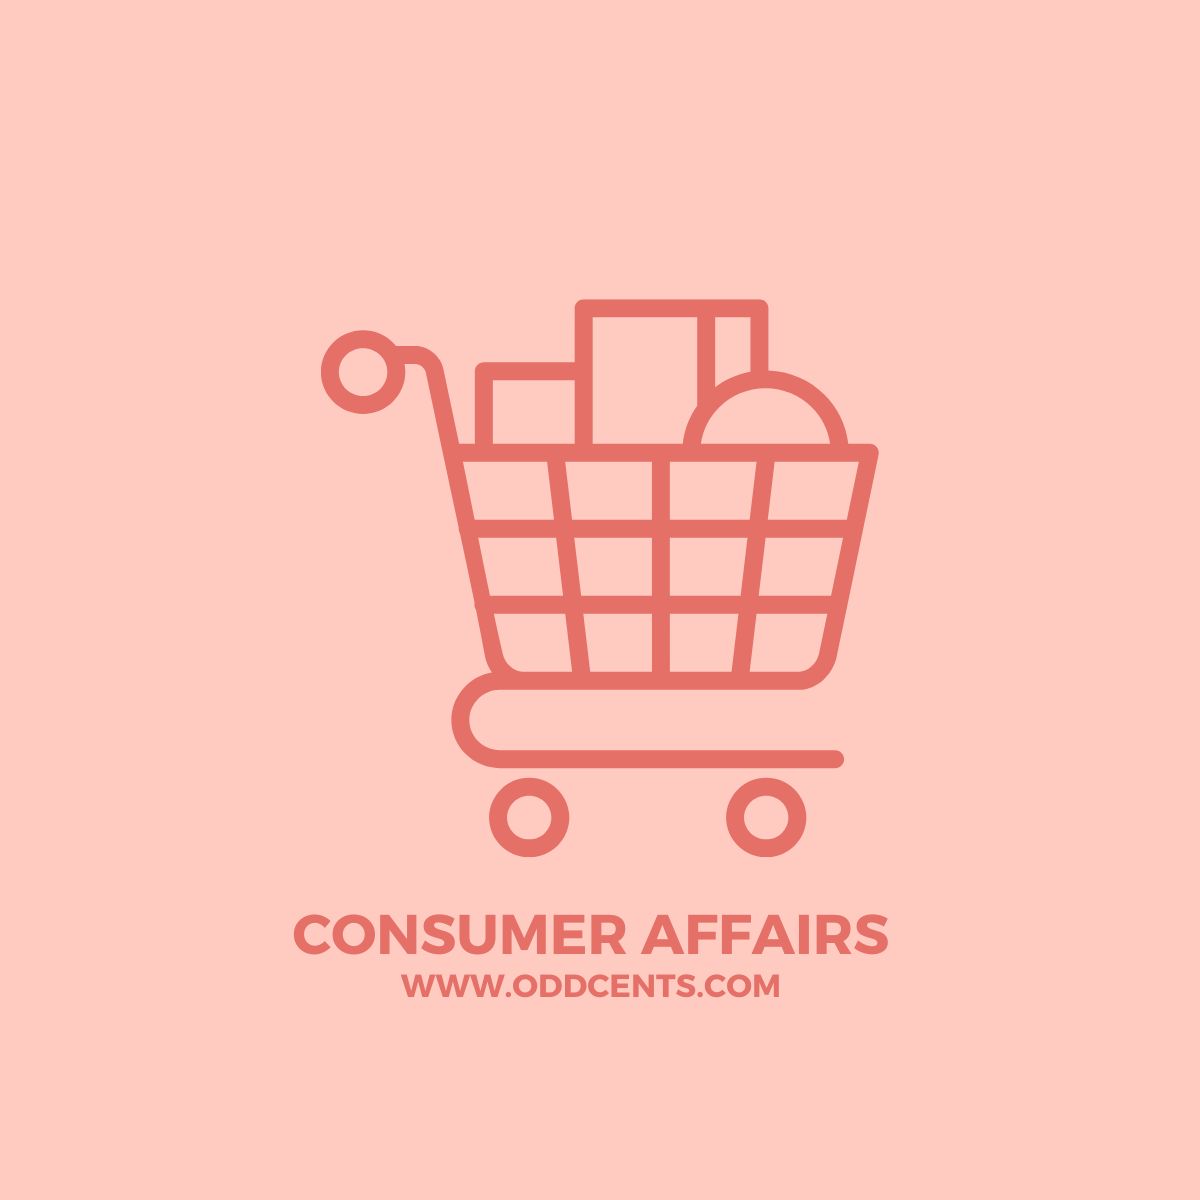 Odd Cents - Consumer Affairs